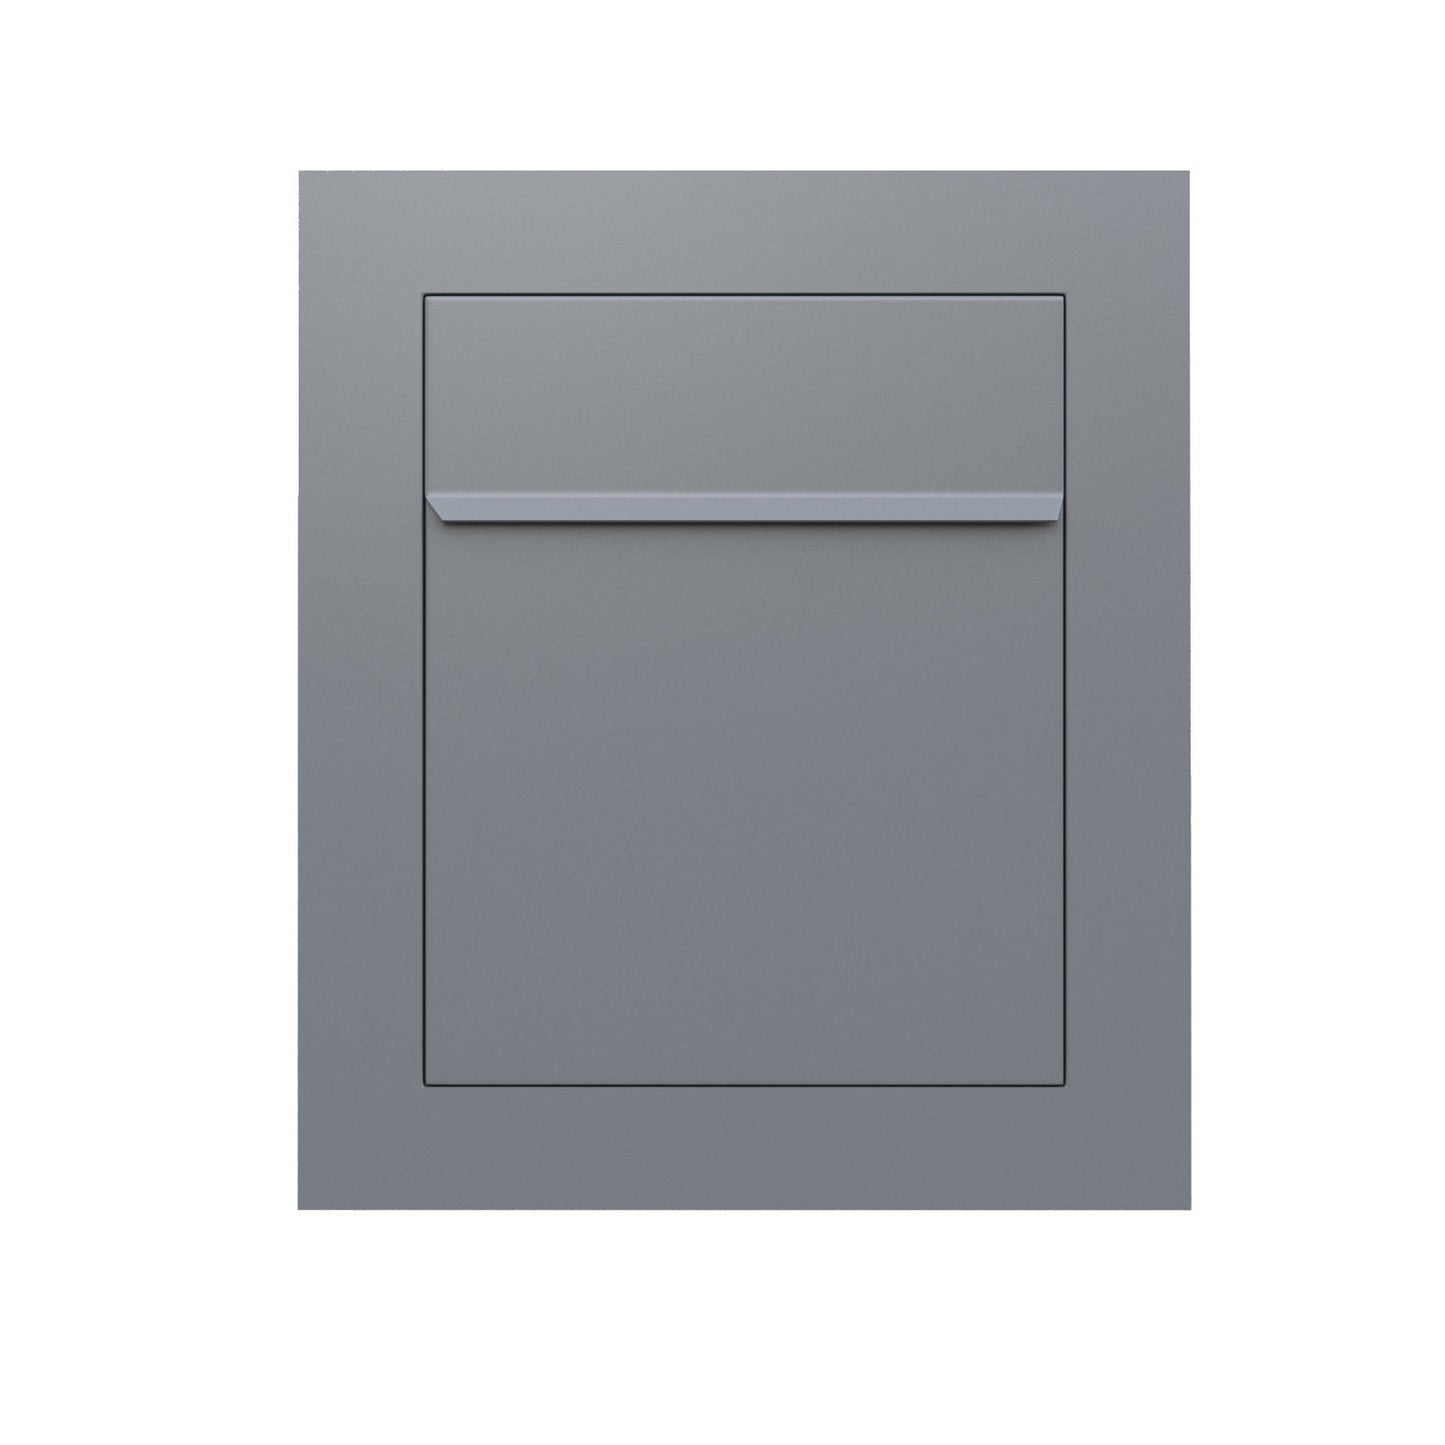 BARI by Bravios - Modern built-in gray mailbox